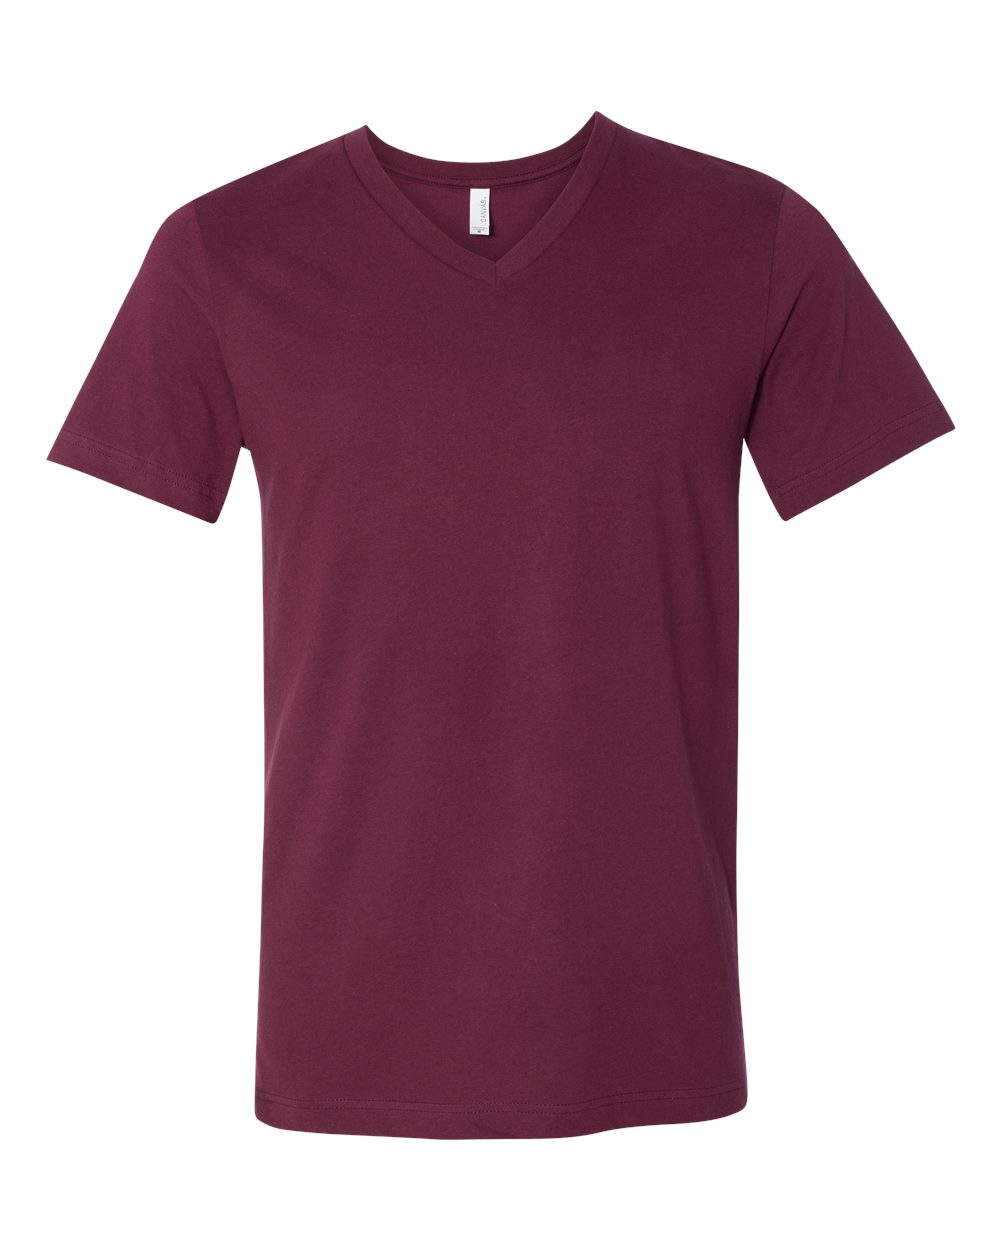 Bella + Canvas 3005 - Unisex V-Neck Jersey Tee $6.66 - Men's T-Shirts